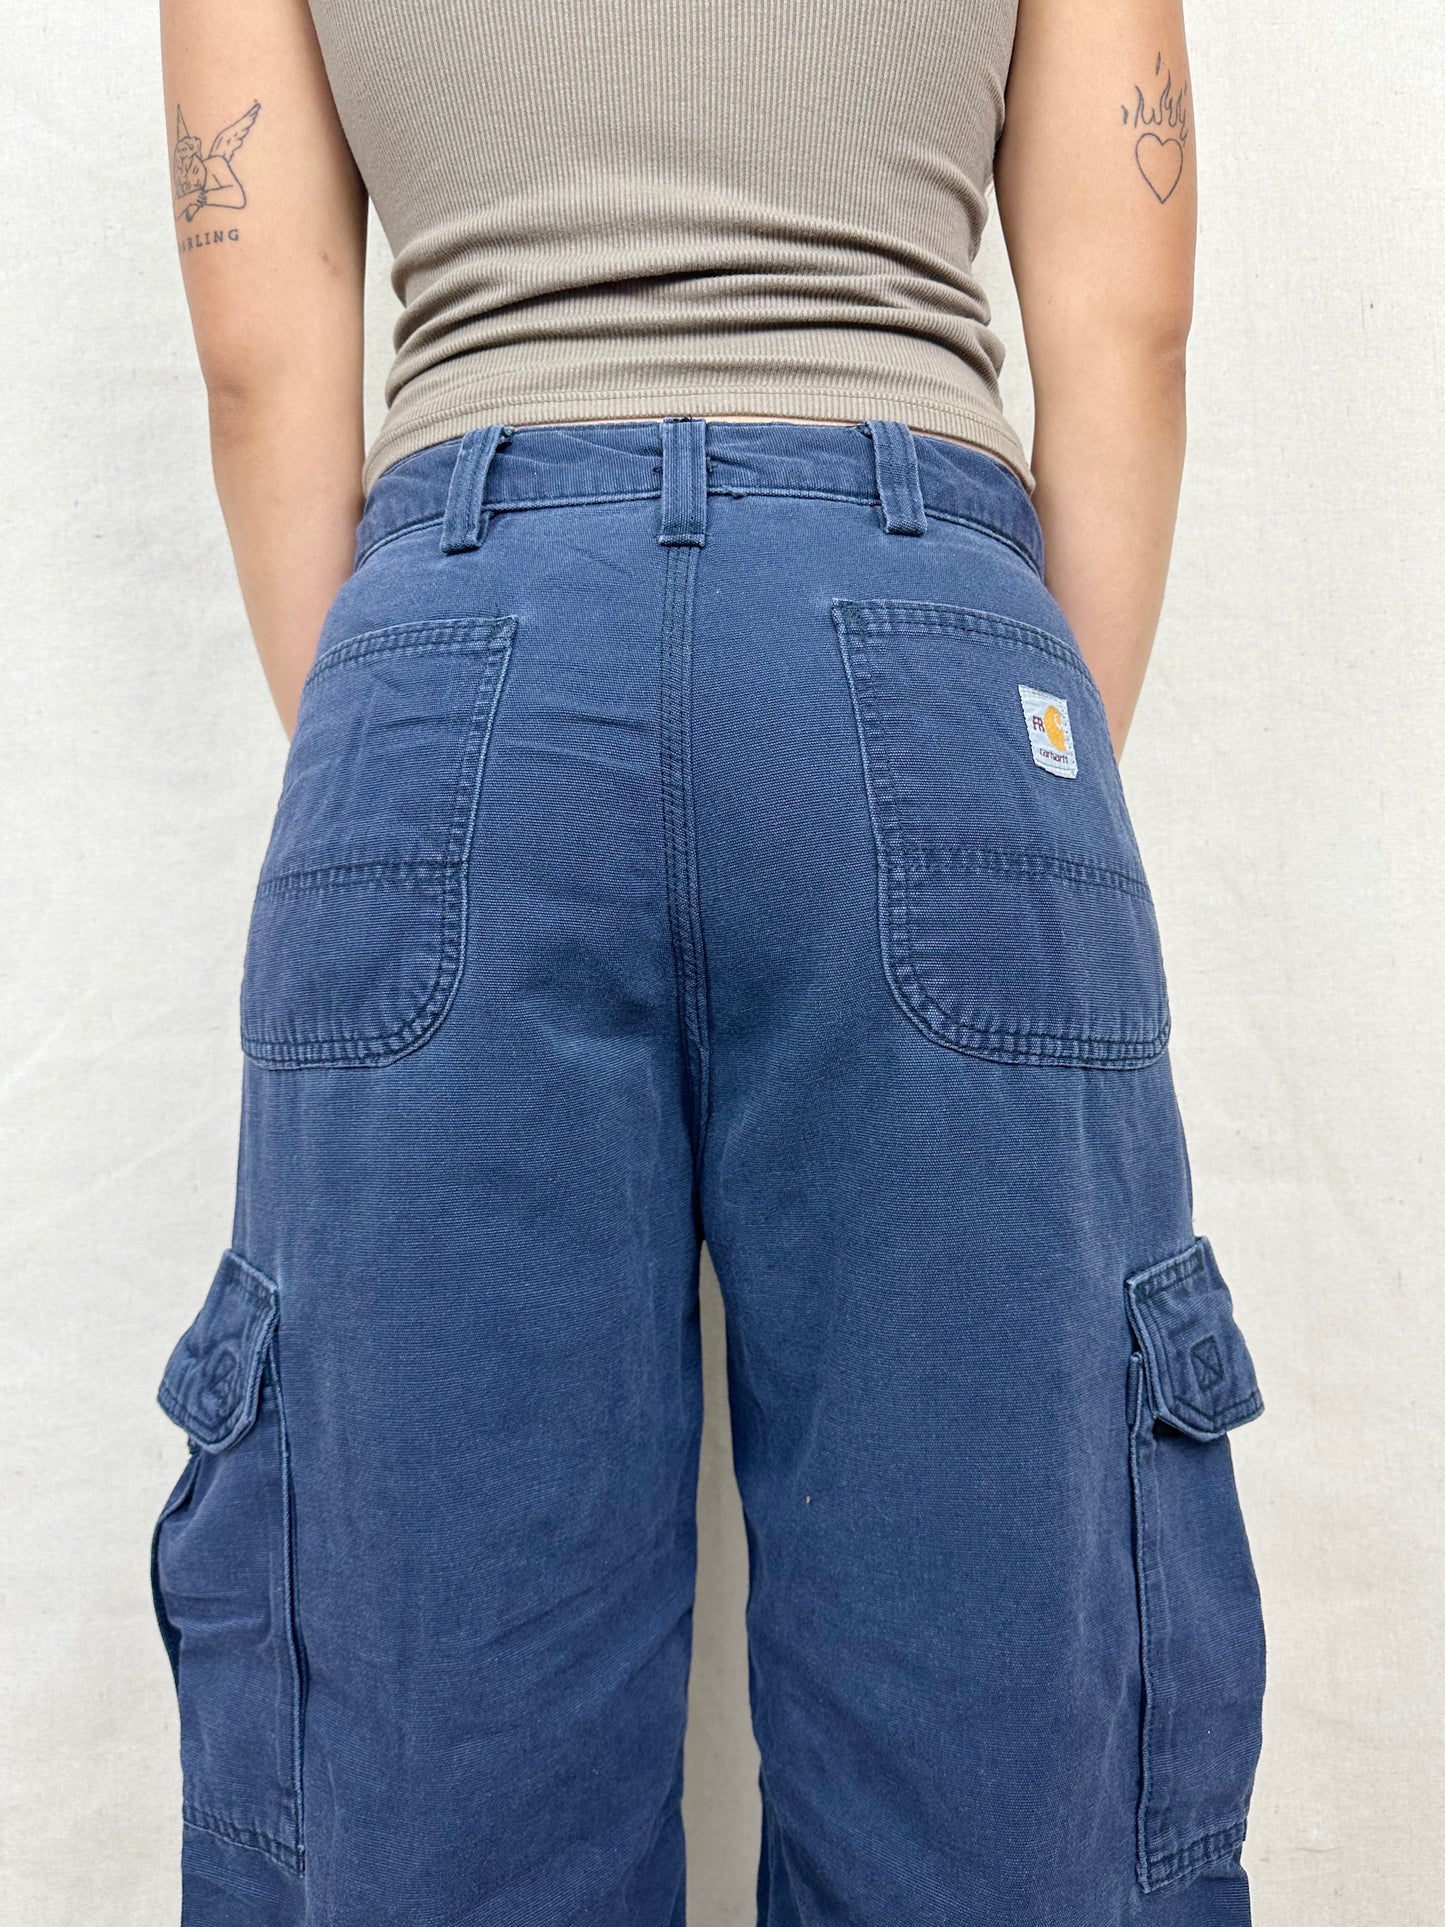 90's Carhartt Vintage Cargo Pants Size 30x32